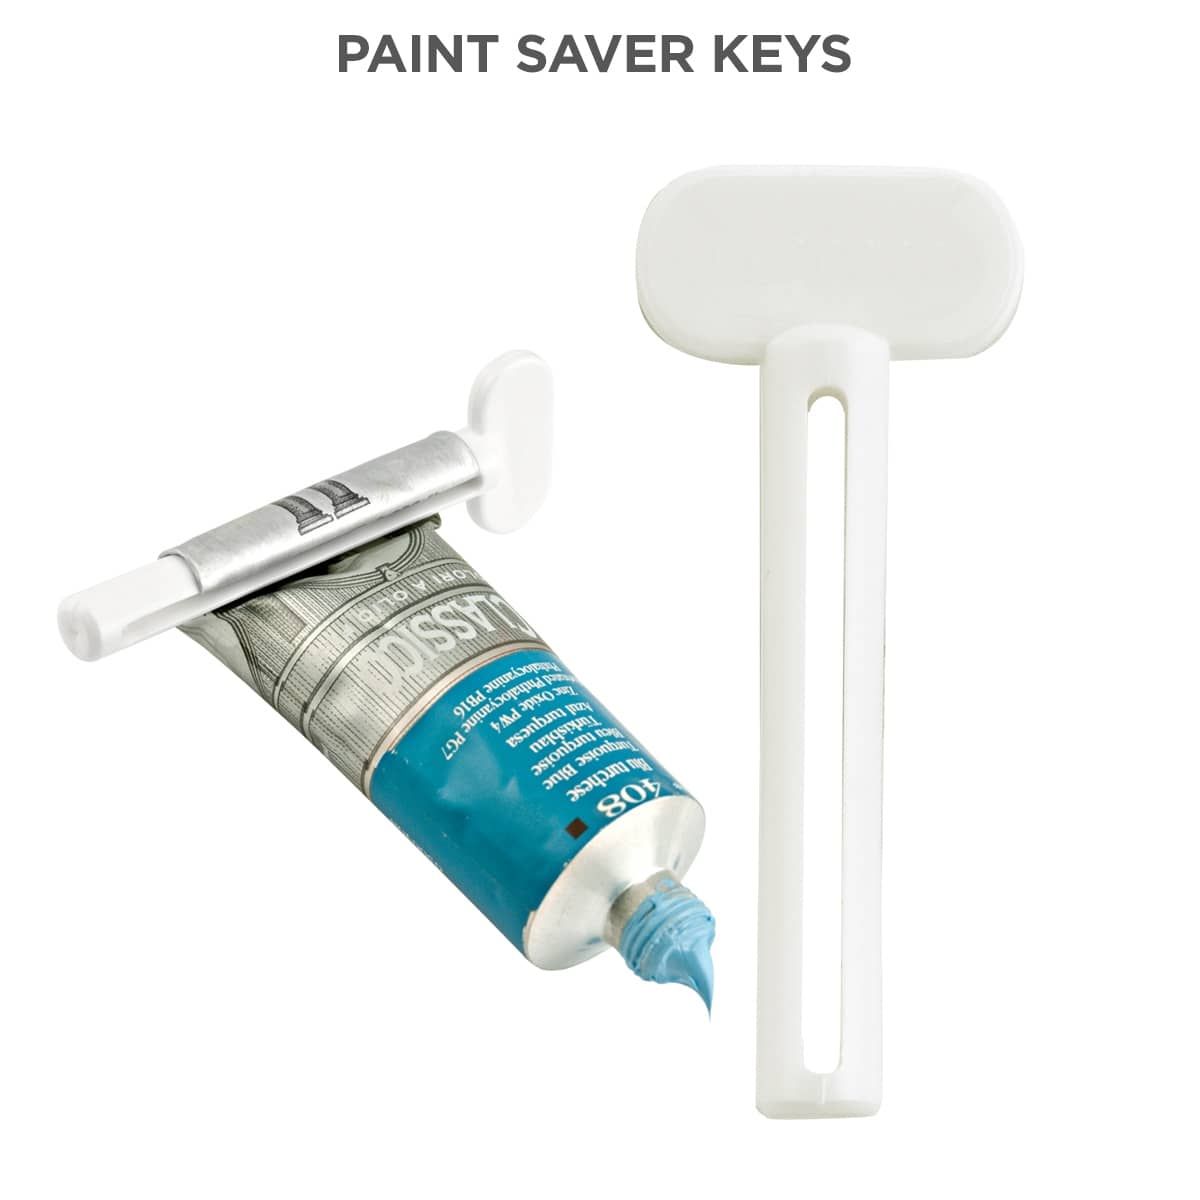 Paint Saver Keys